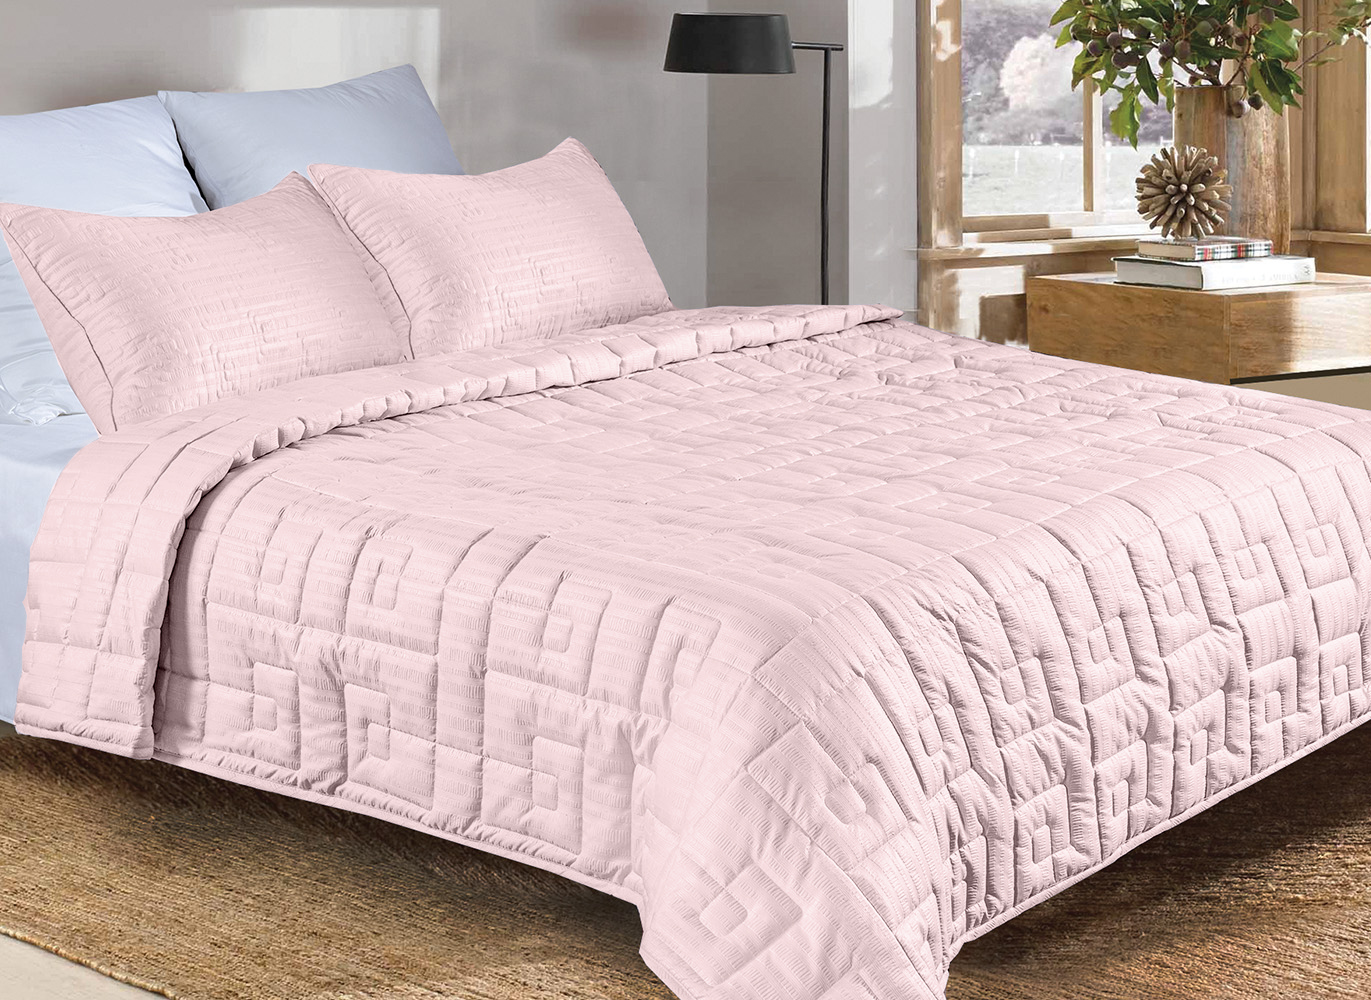 фото Одеяло rosaline 140х205, цвет розовый, тм just sleep